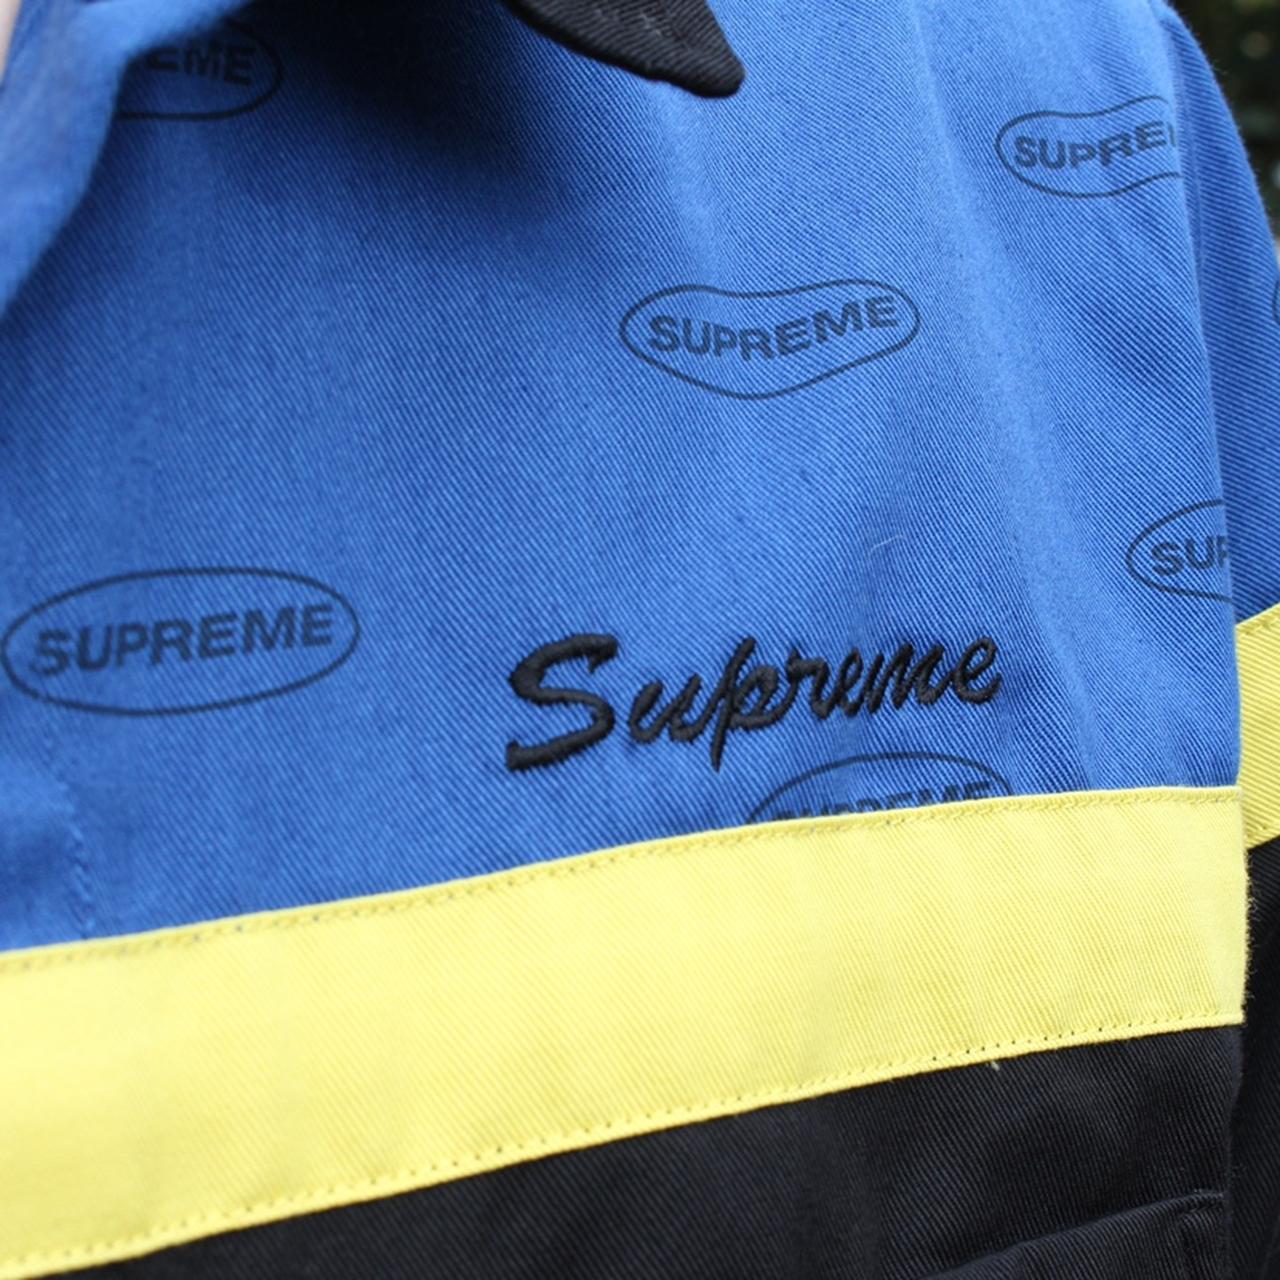 Supreme The Best In The World Work Shirt, worn...